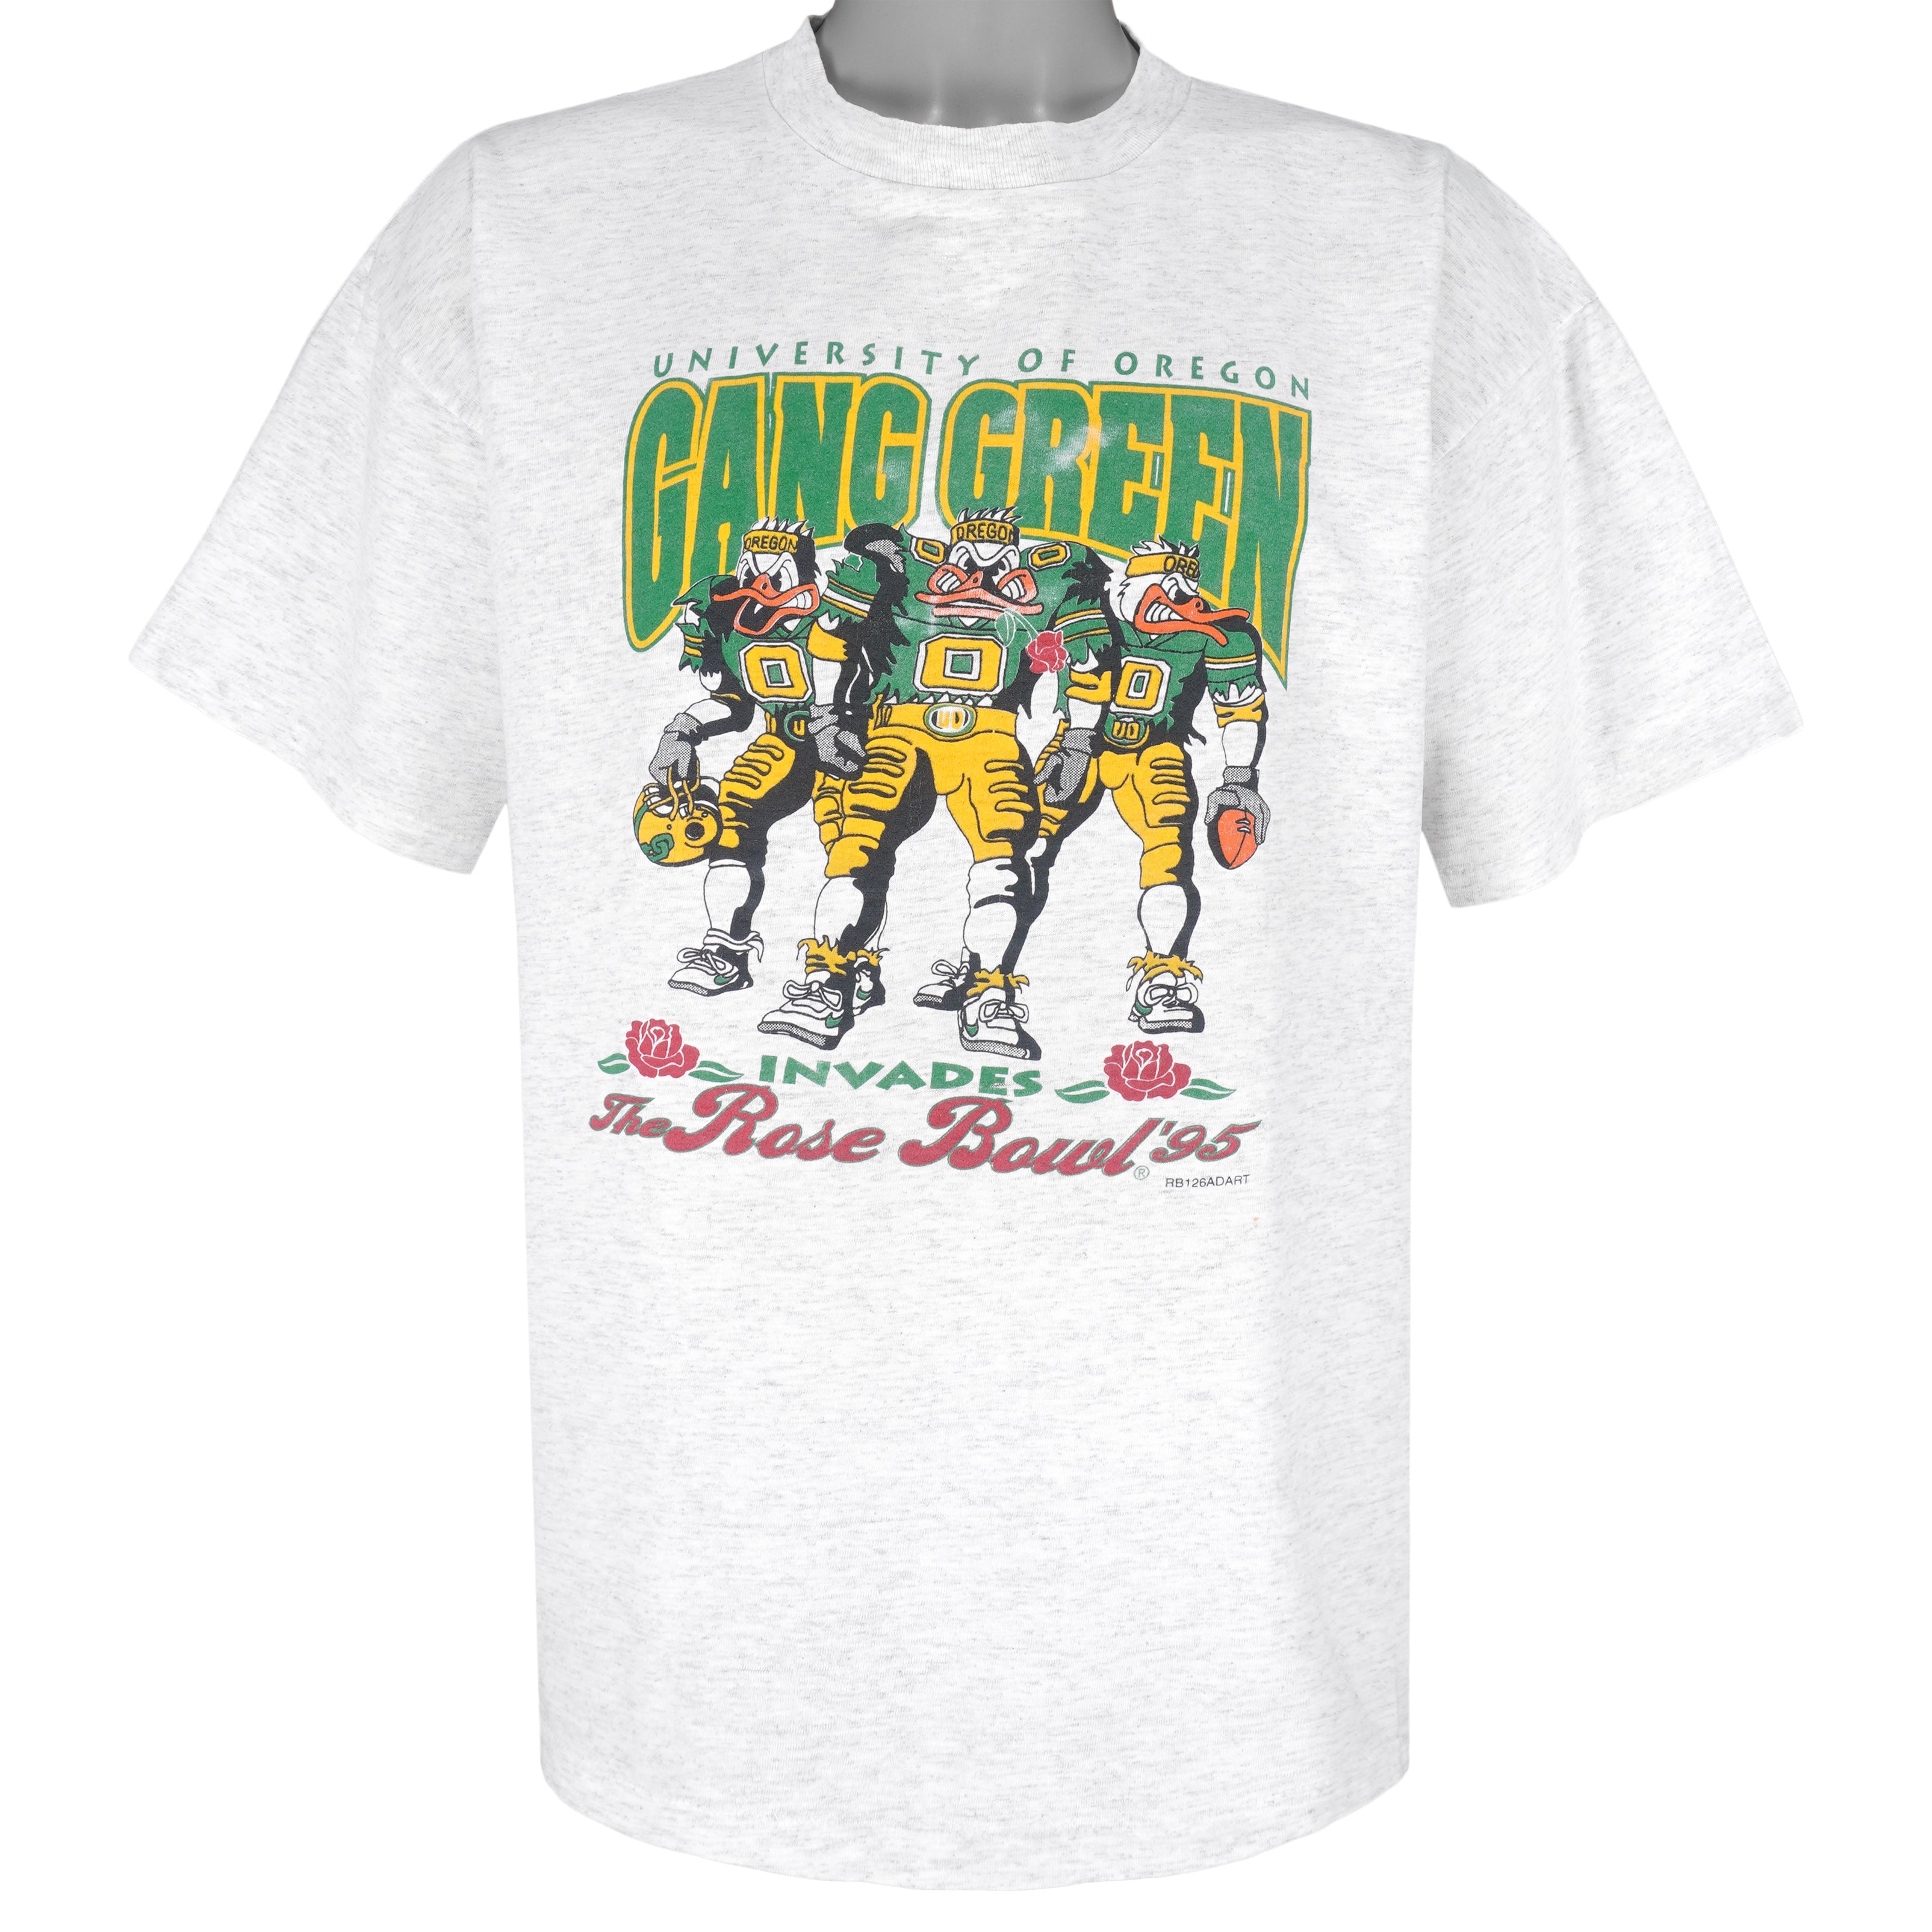 American Classic 1995 Oregon Ducks Vintage Rose Bowl Crewneck Sweatshirt. Made in The USA. Large